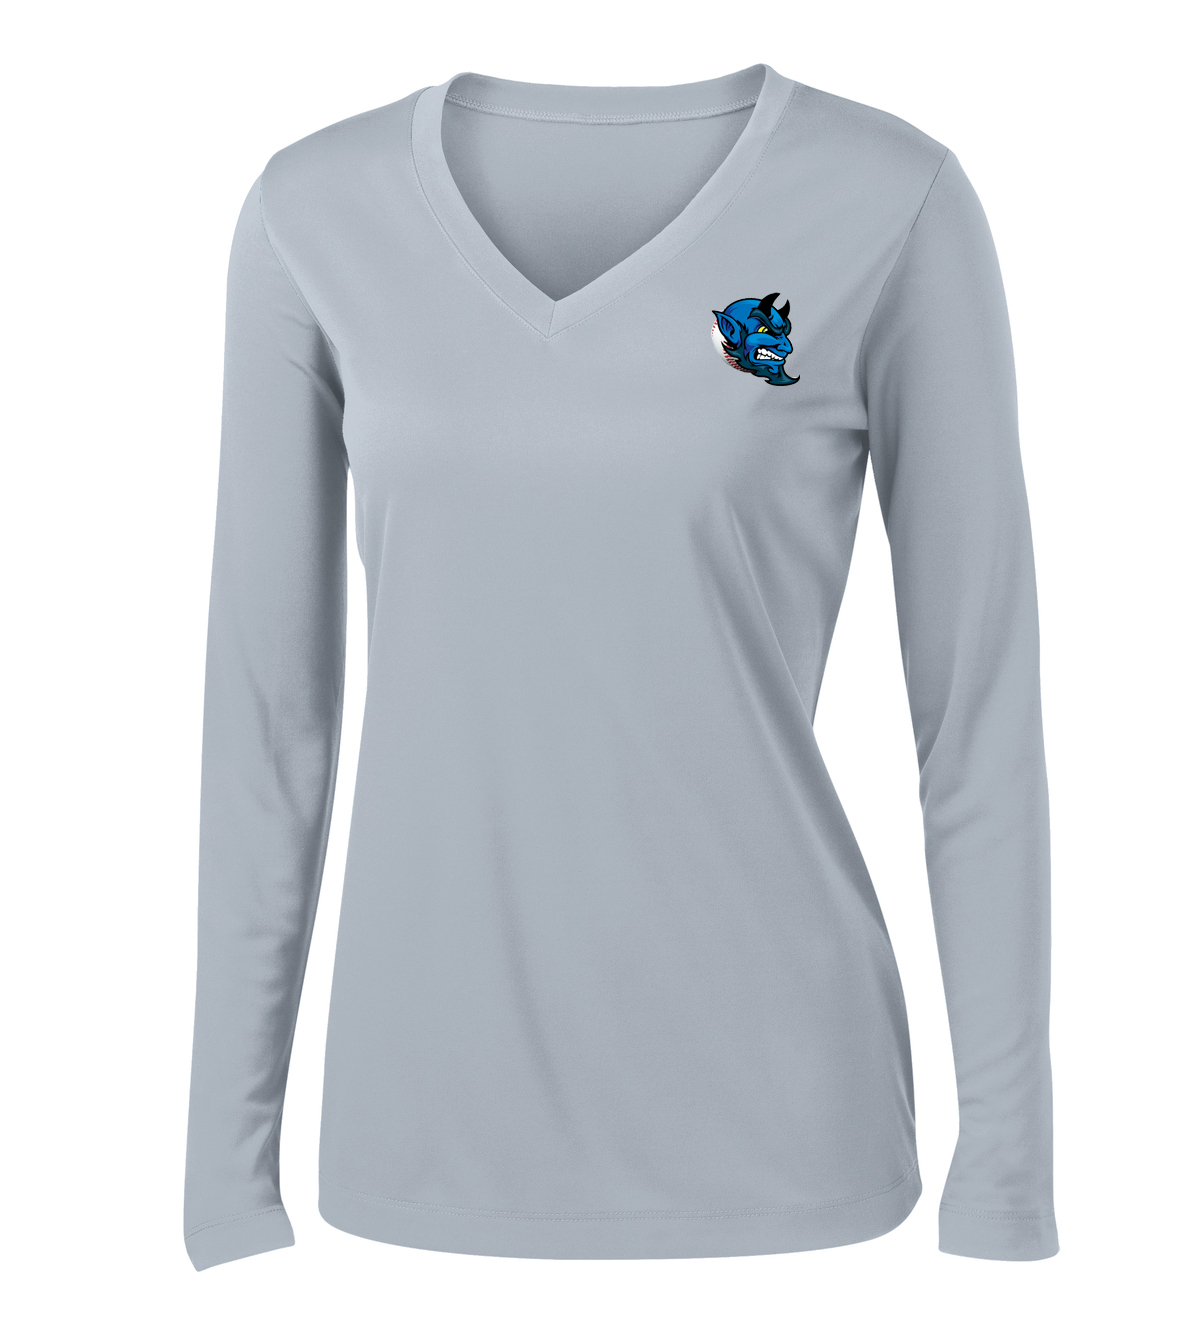 Blue Devils Baseball Women's Long Sleeve Performance Shirt